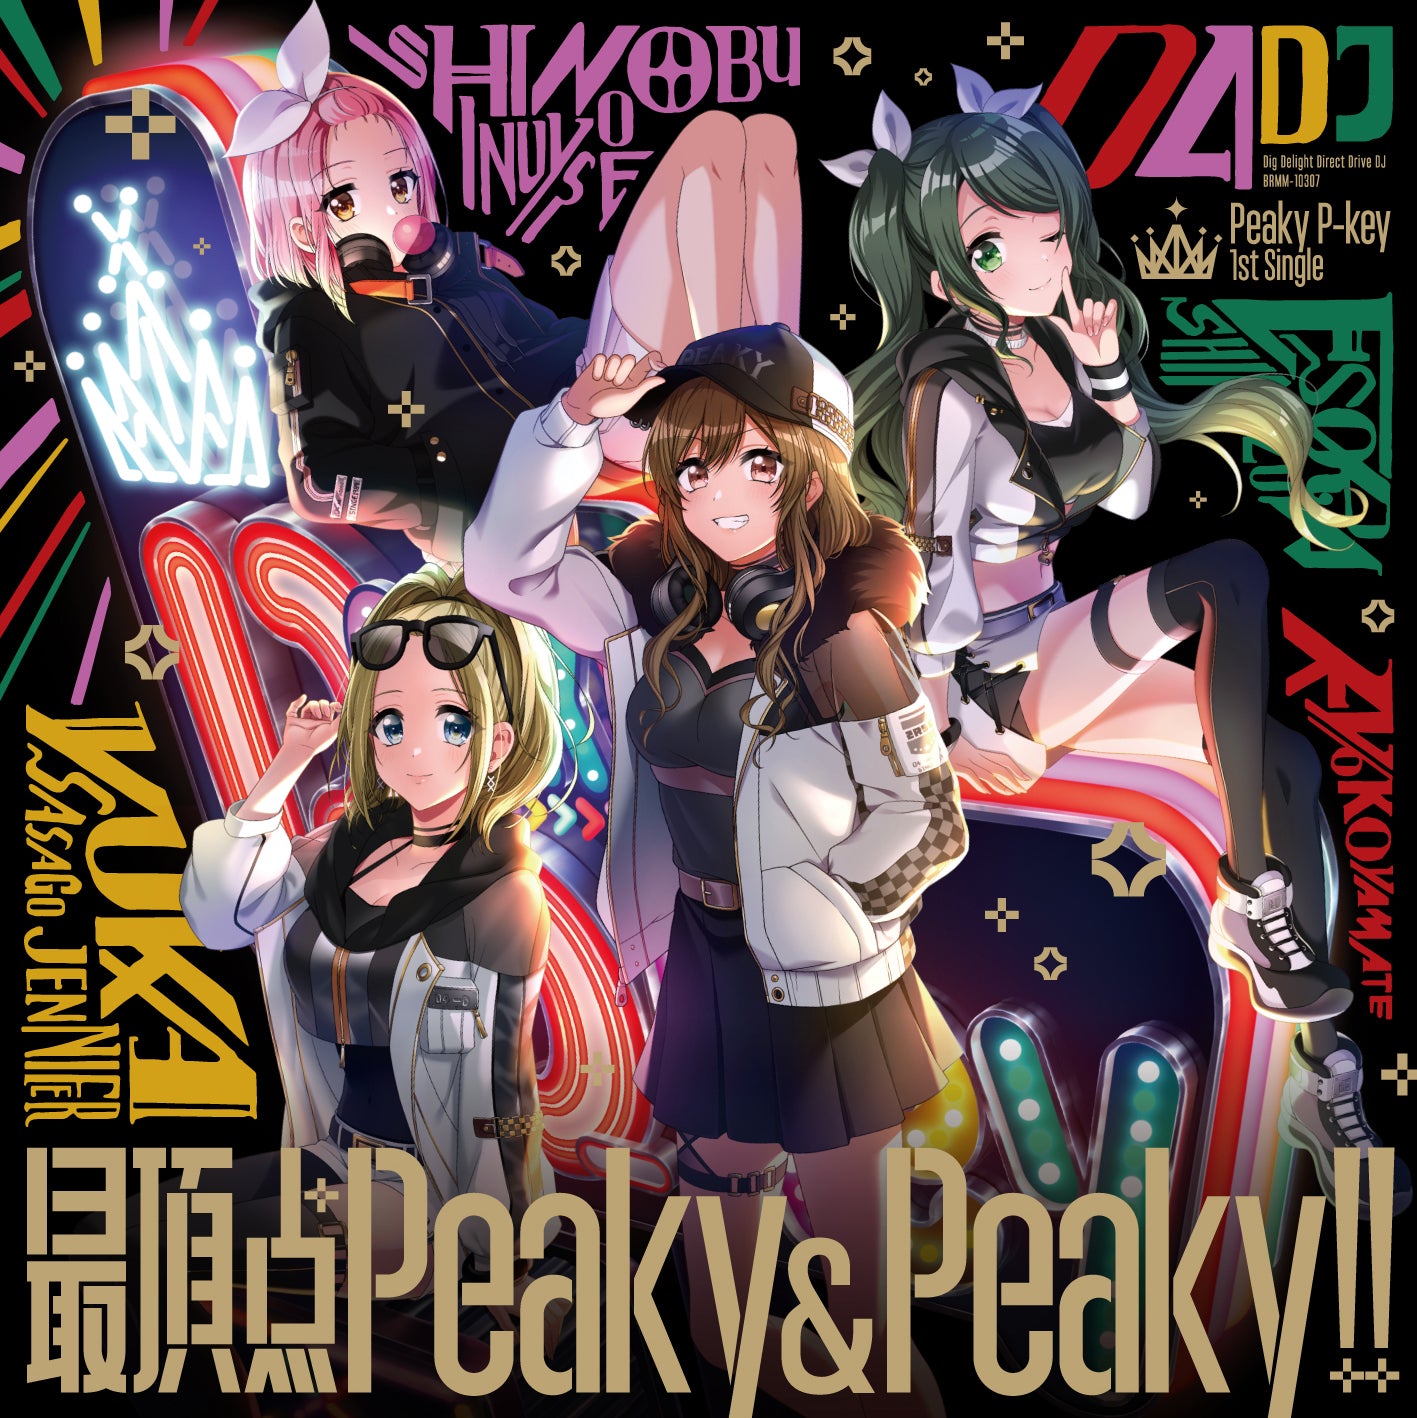 Peaky P-key 1st Single "Peak Peaky&Peaky!!"